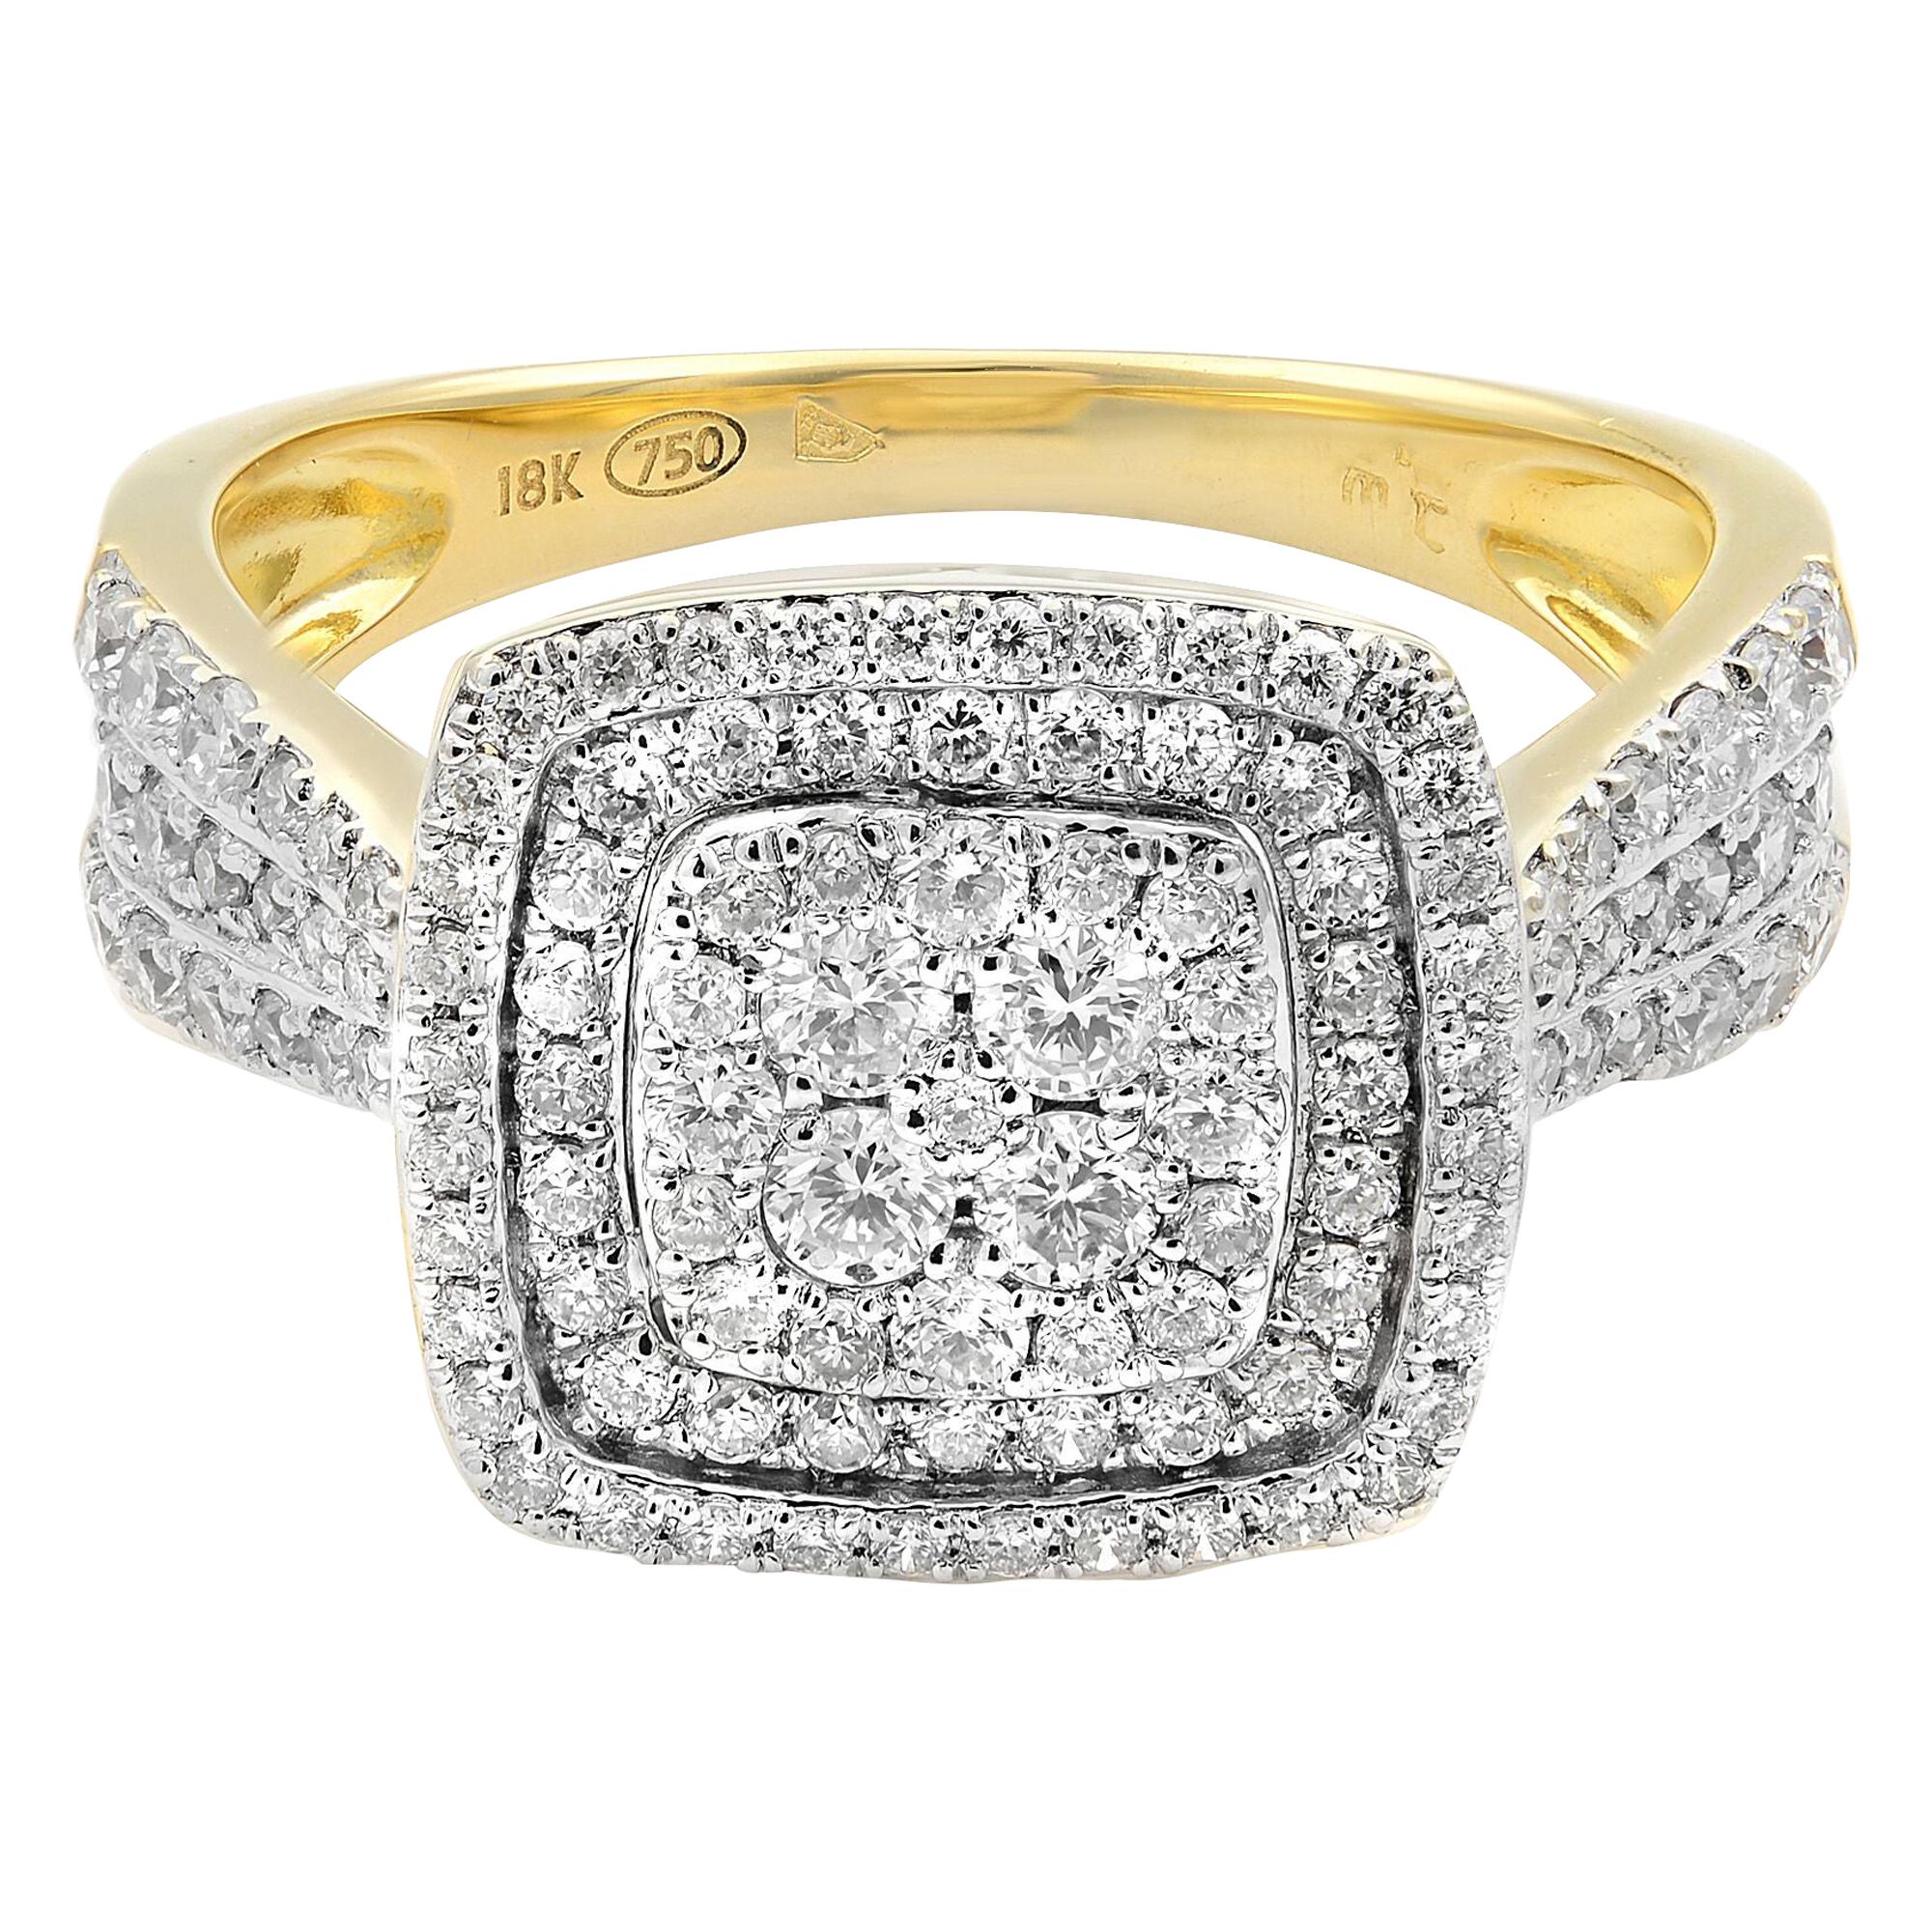 Rachel Koen Multi Diamond Halo Engagement Ring 18K Yellow Gold 0.95 Cttw Size 7